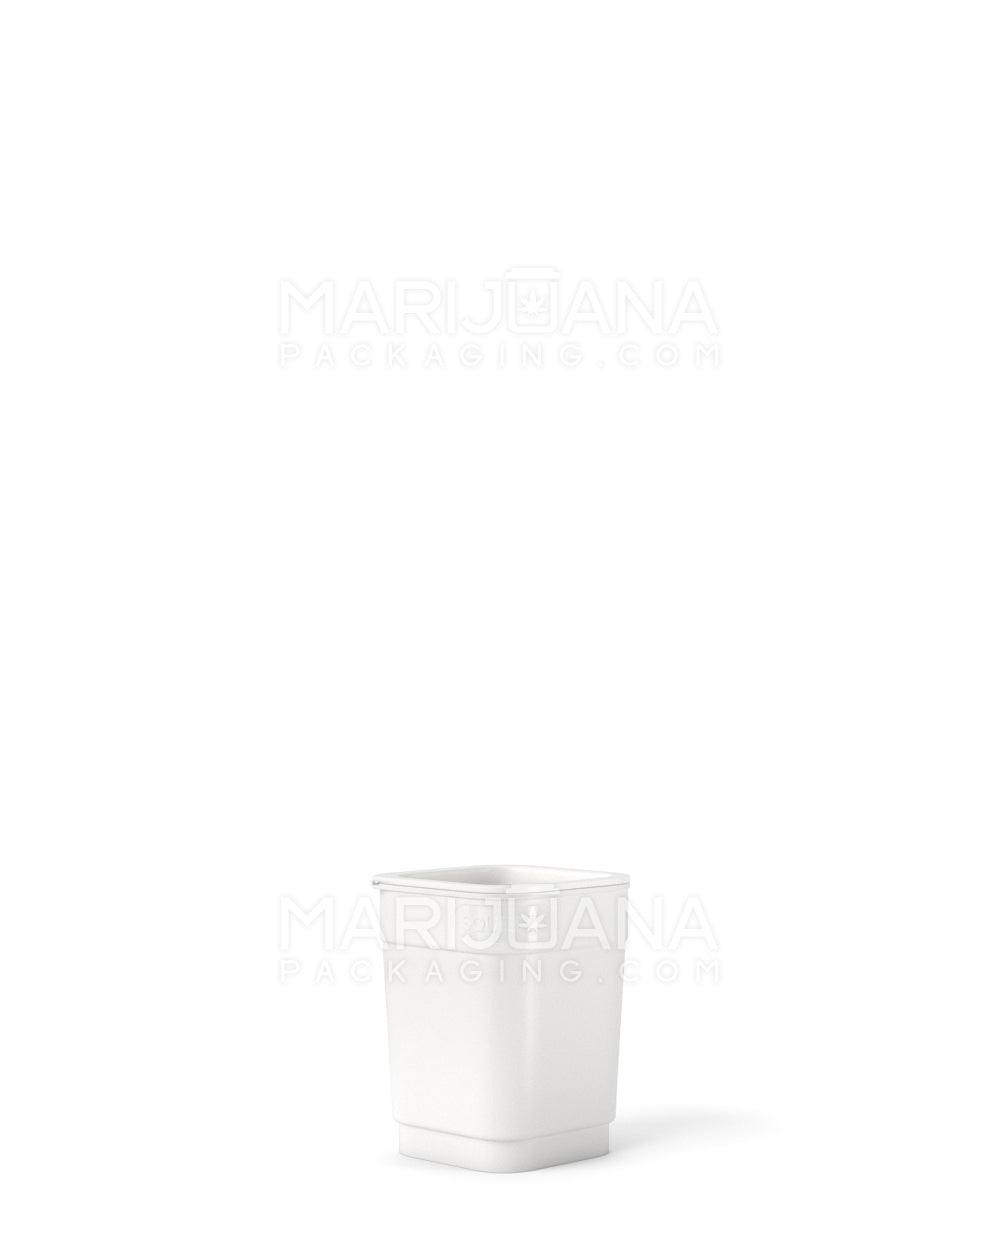 POLLEN GEAR | 100% Recyclable Opaque White Pop Box Pop Top Bottles | 6dr - 1g - 1632 Count - 2